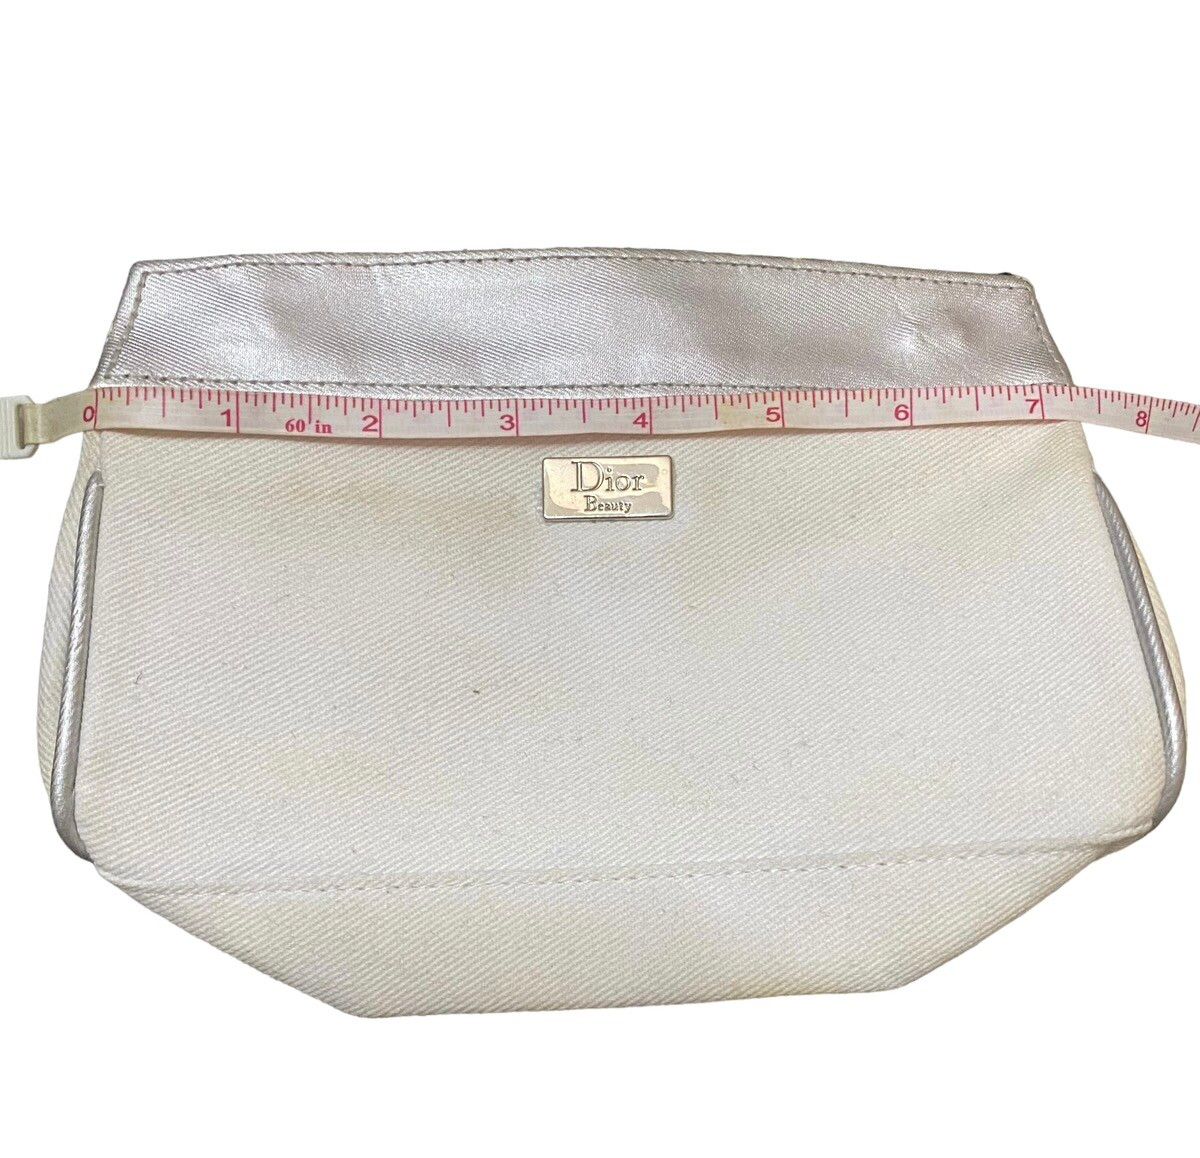 Dior Beauty Cosmetic Bag - 15